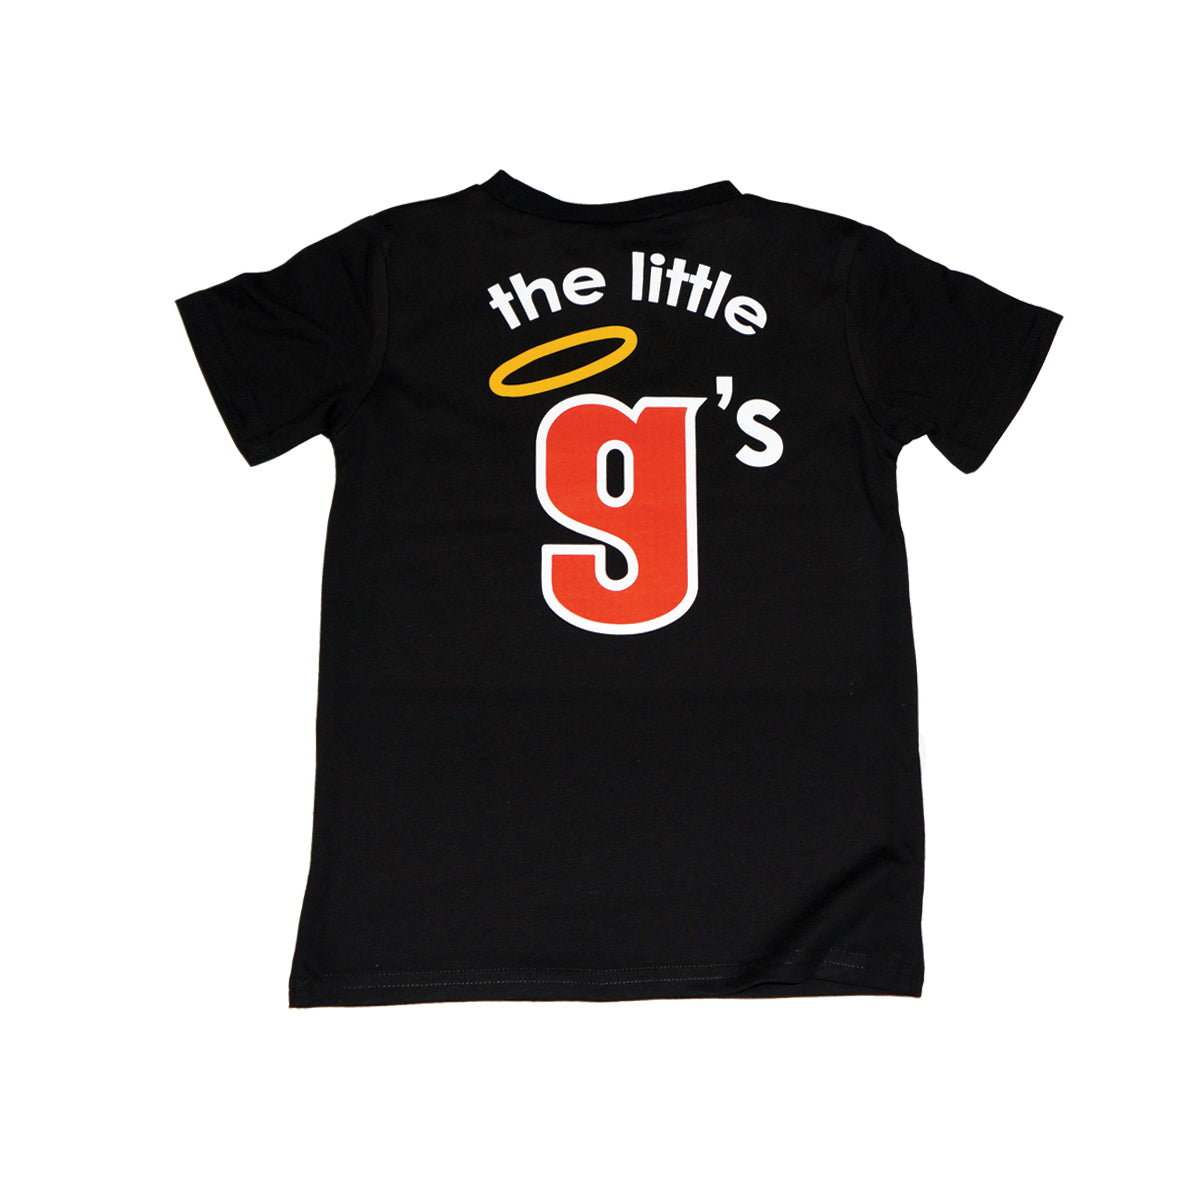 Halo Little g's T-shirt (Black)